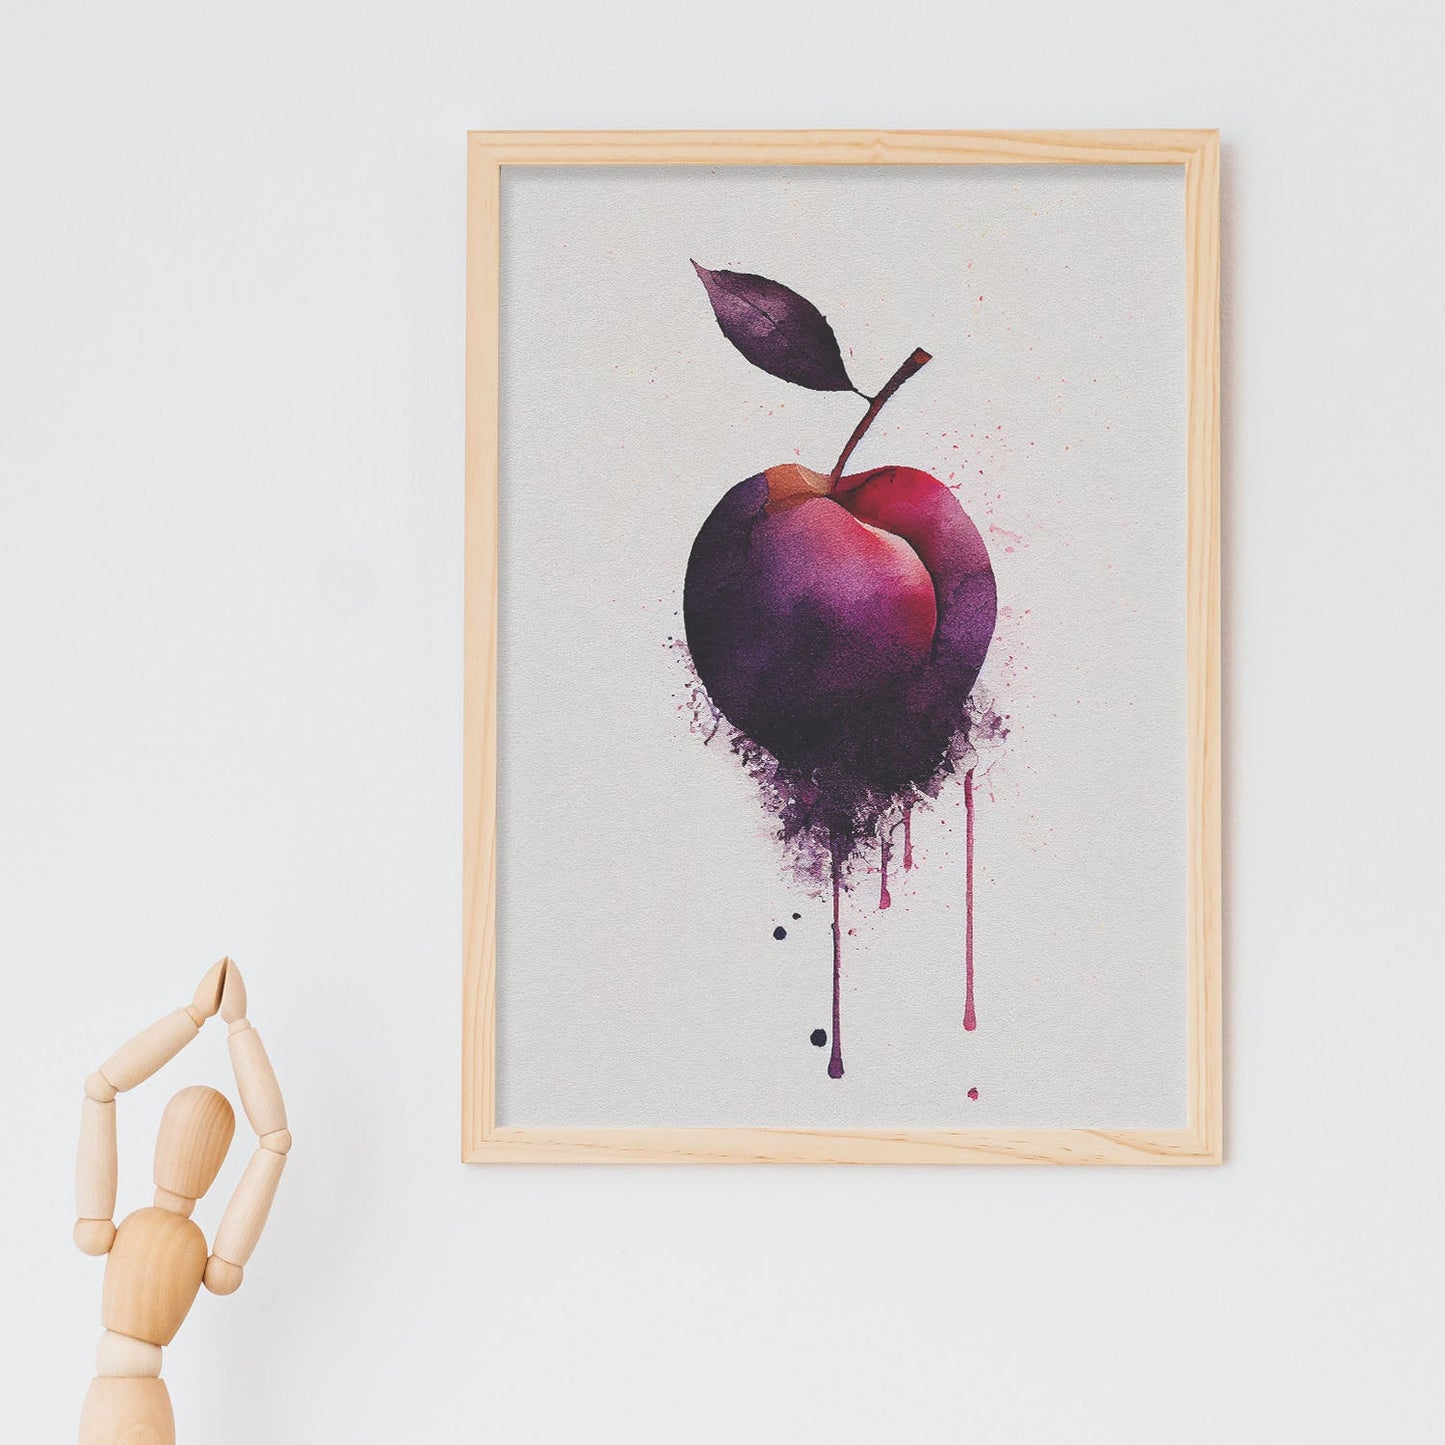 Nacnic minimalist Plum_2. Aesthetic Wall Art Prints for Bedroom or Living Room Design.